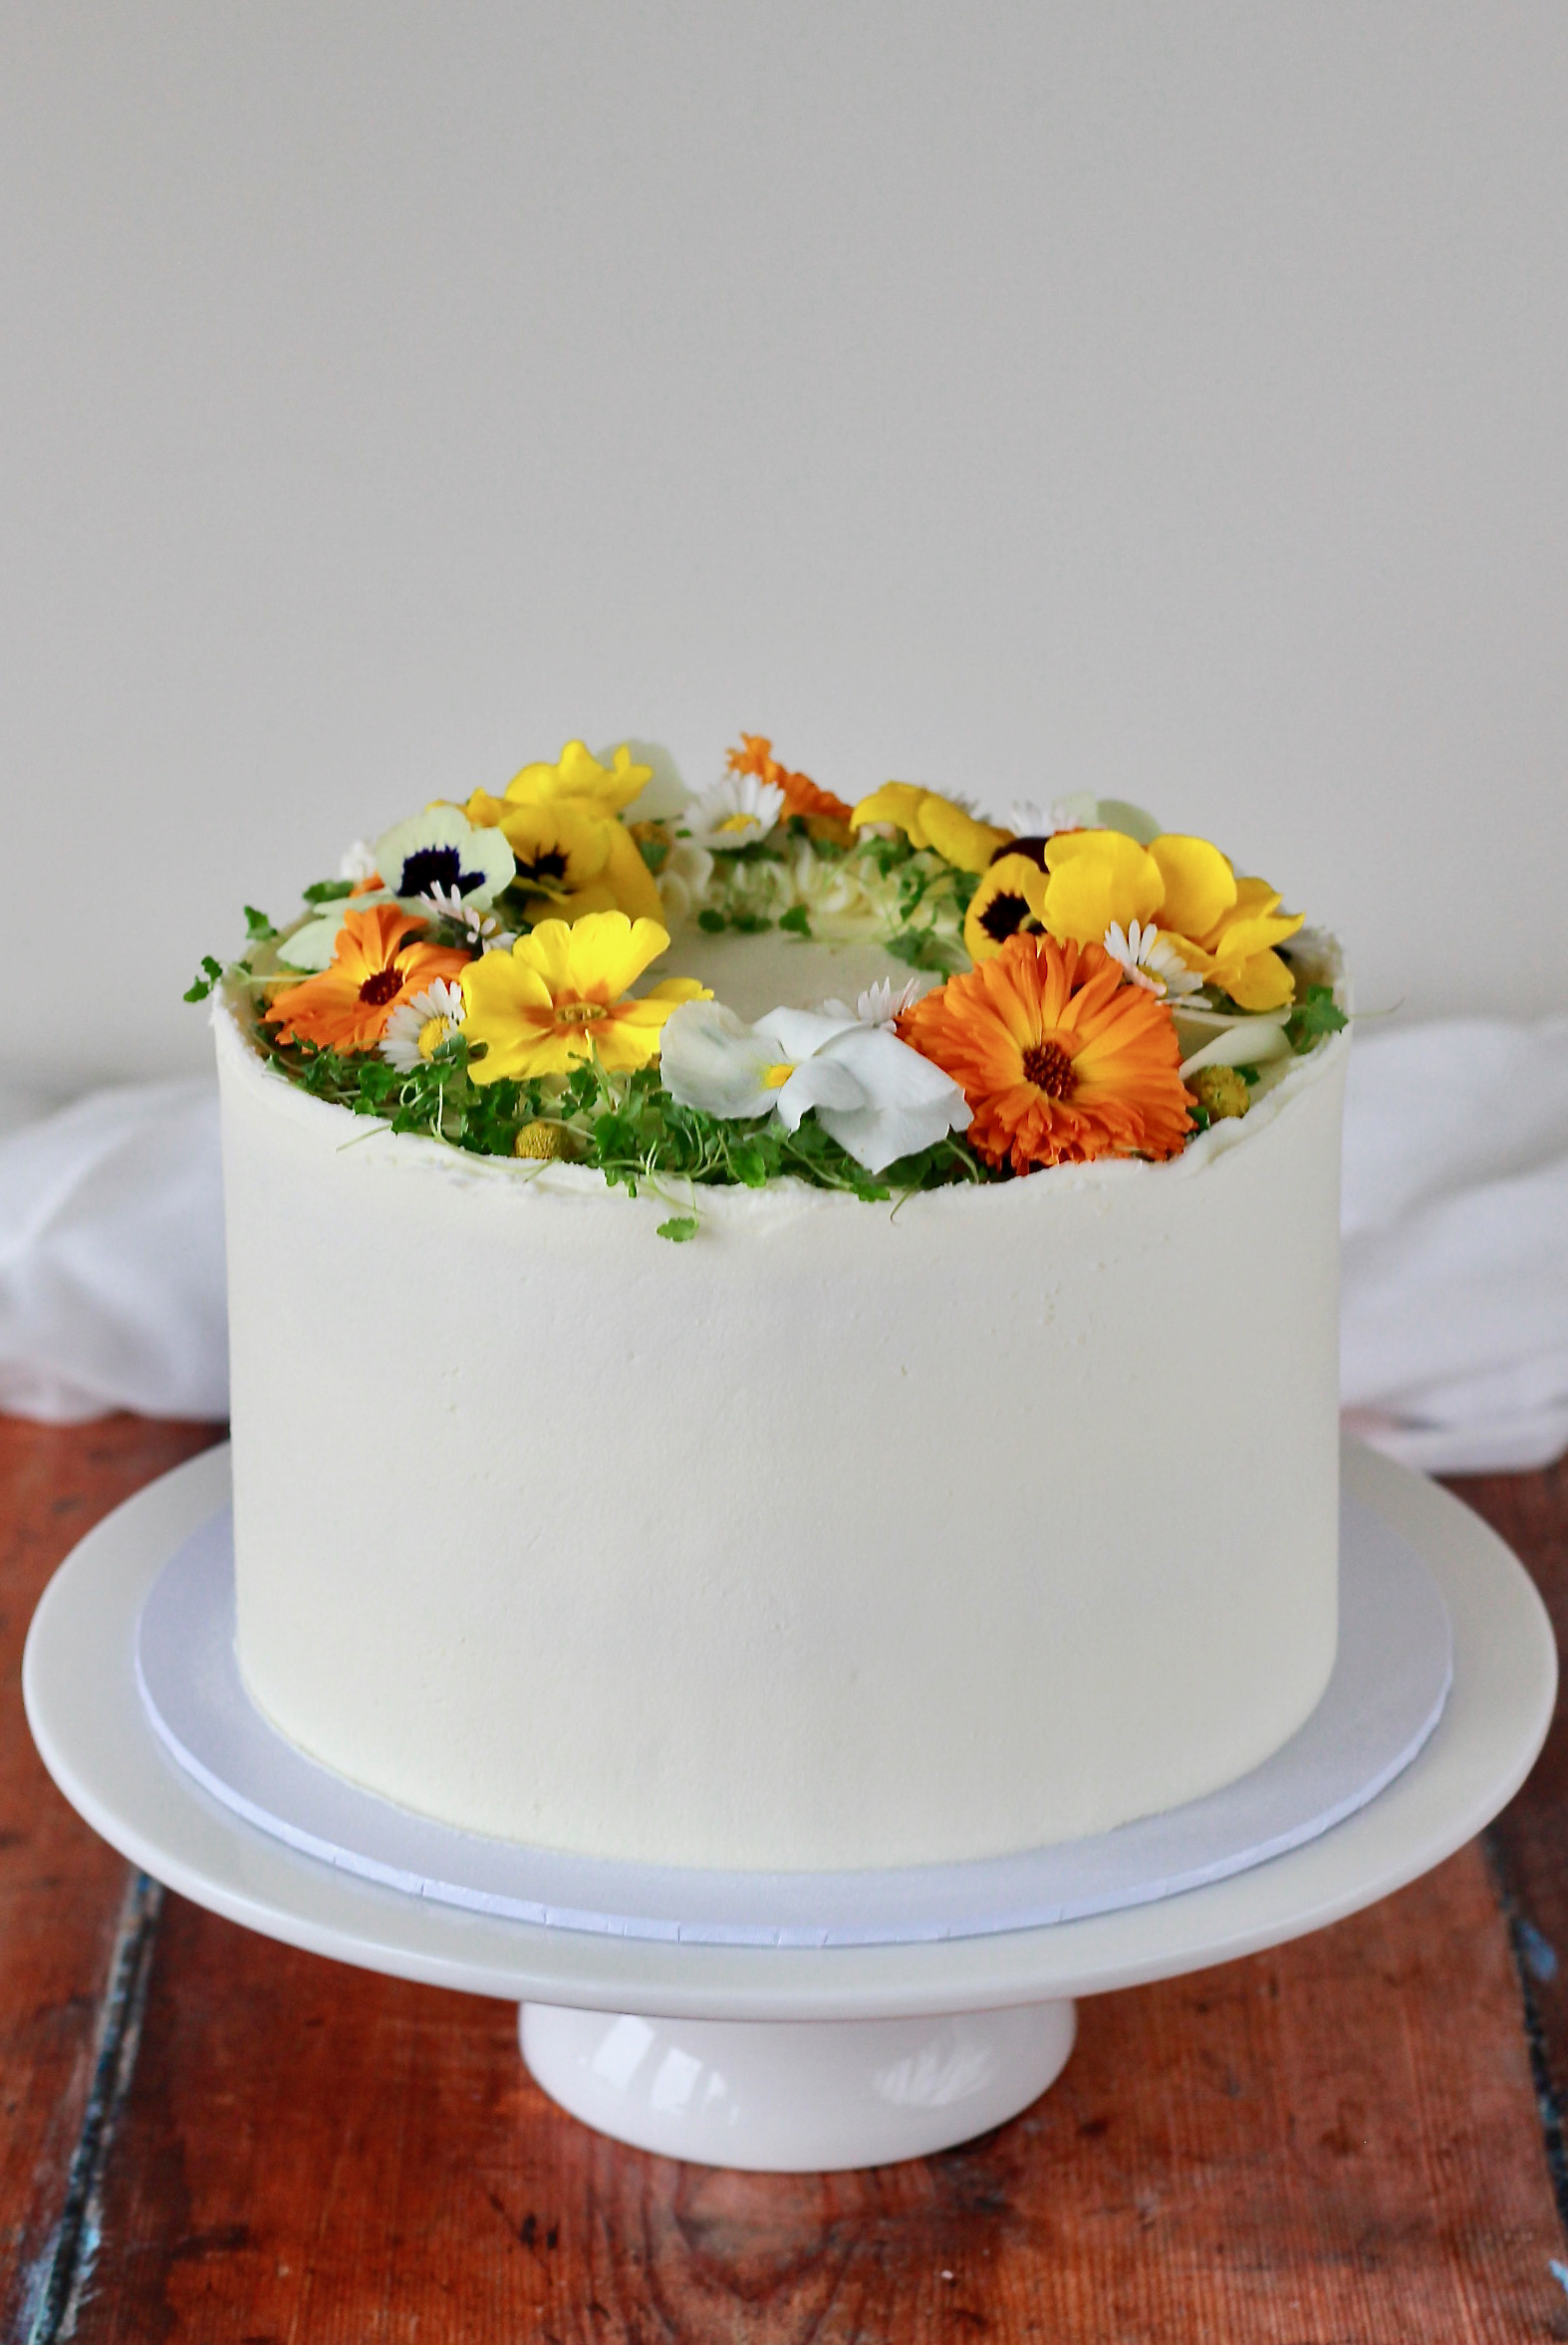 Vegan edible flower cake Cotswolds